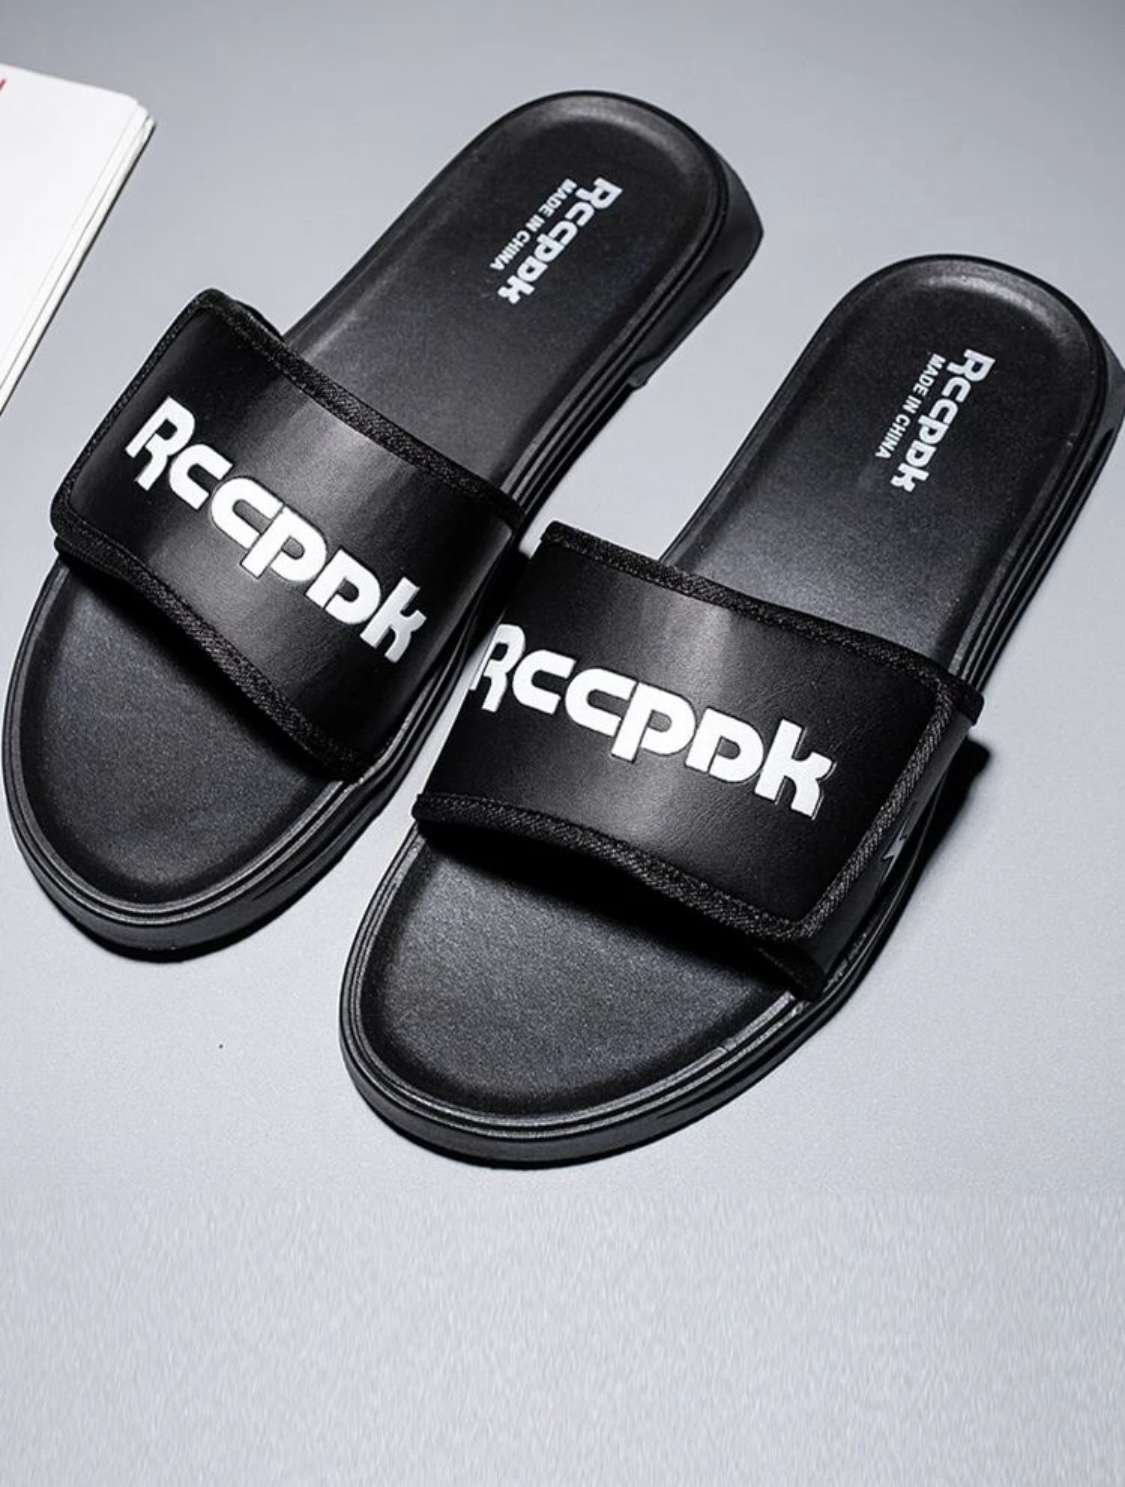 Brand new slippers